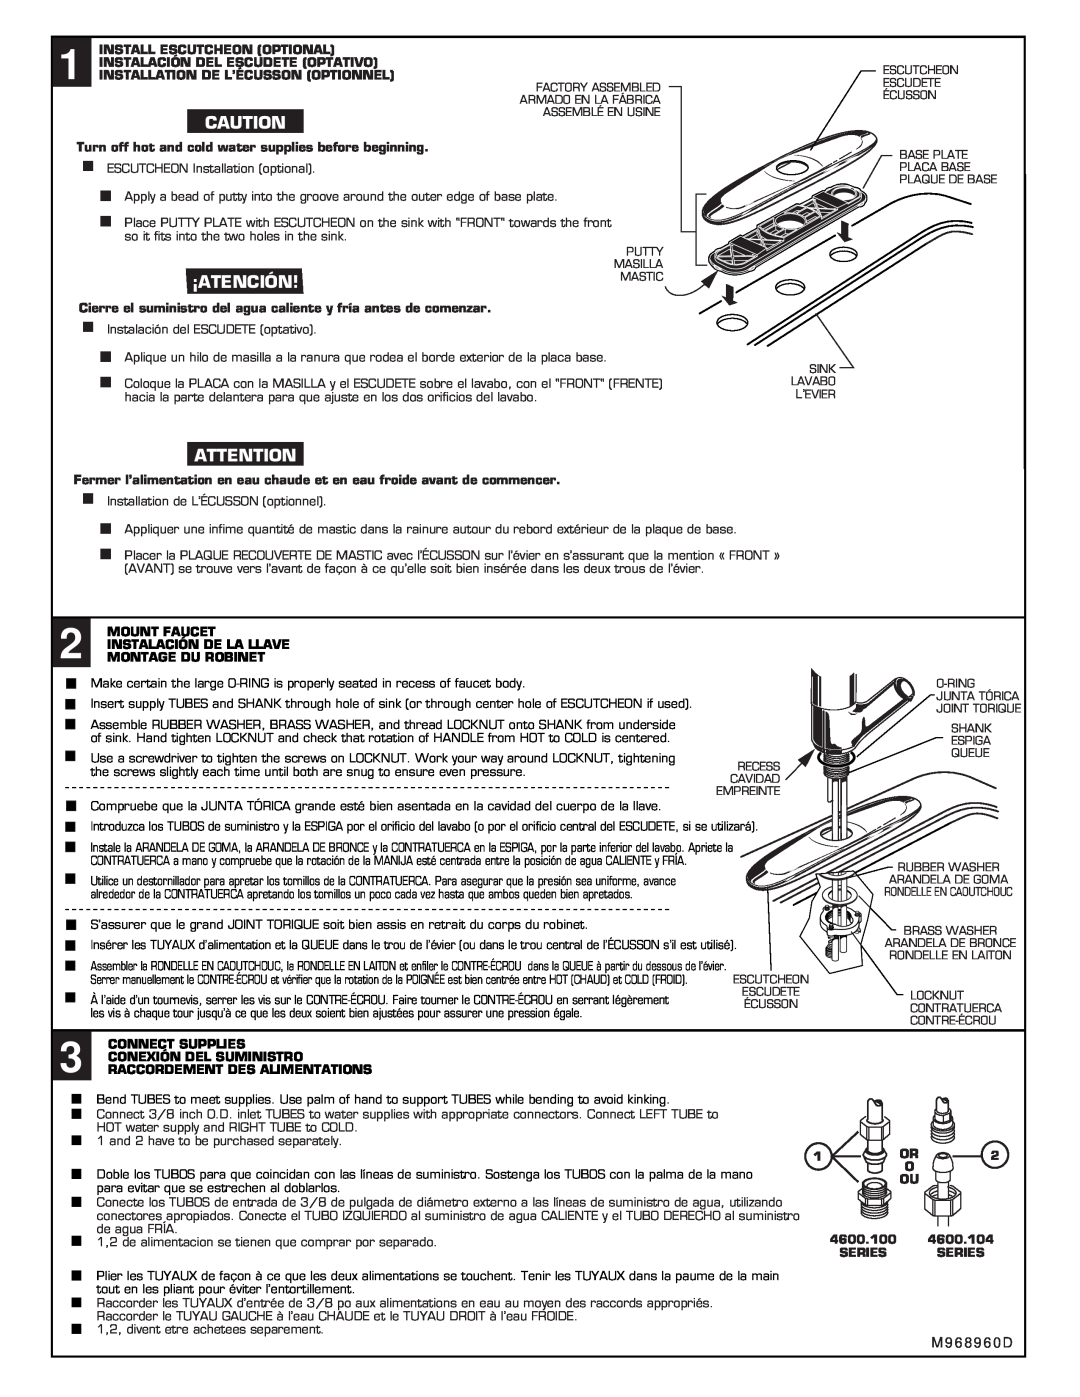 American Standard 4600.104 Series, 4600.100 Series installation instructions ¡Atención!Mastic, M 9 6 8 9 6 0 D 